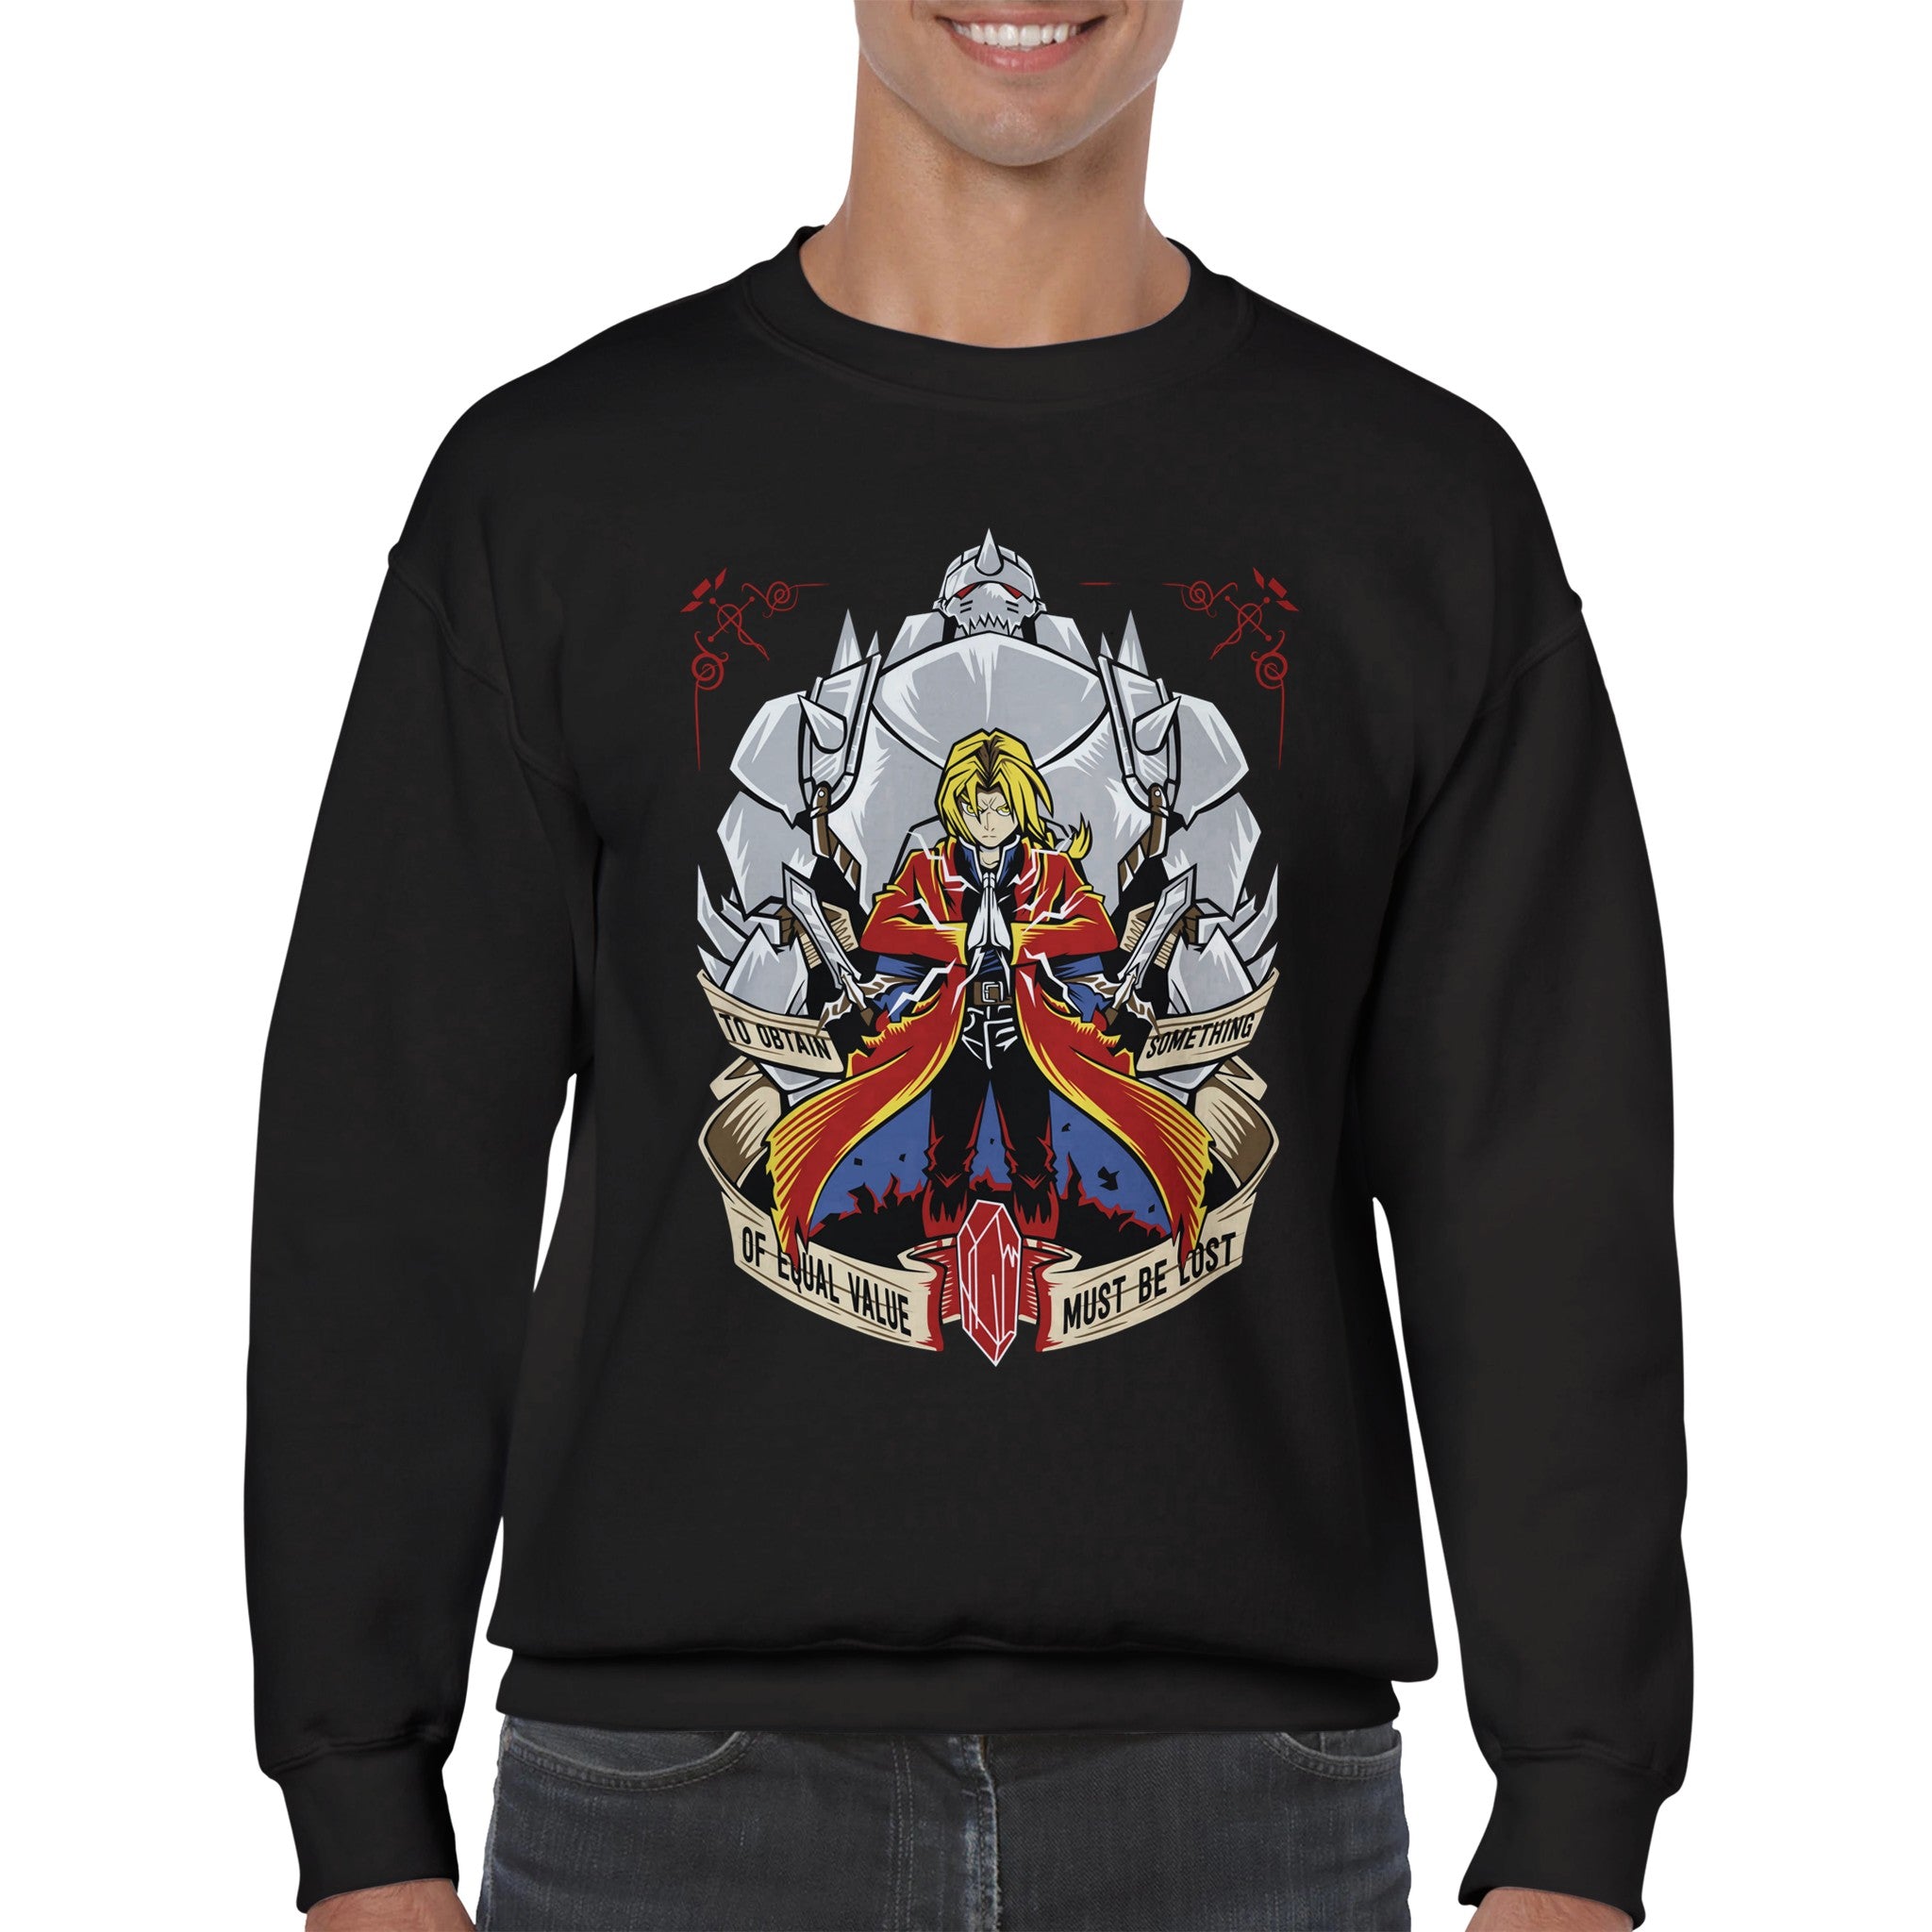 shop and buy fullmetal alchemist anime clothing edward elric and alponse sweatshirt/jumper/longsleeve